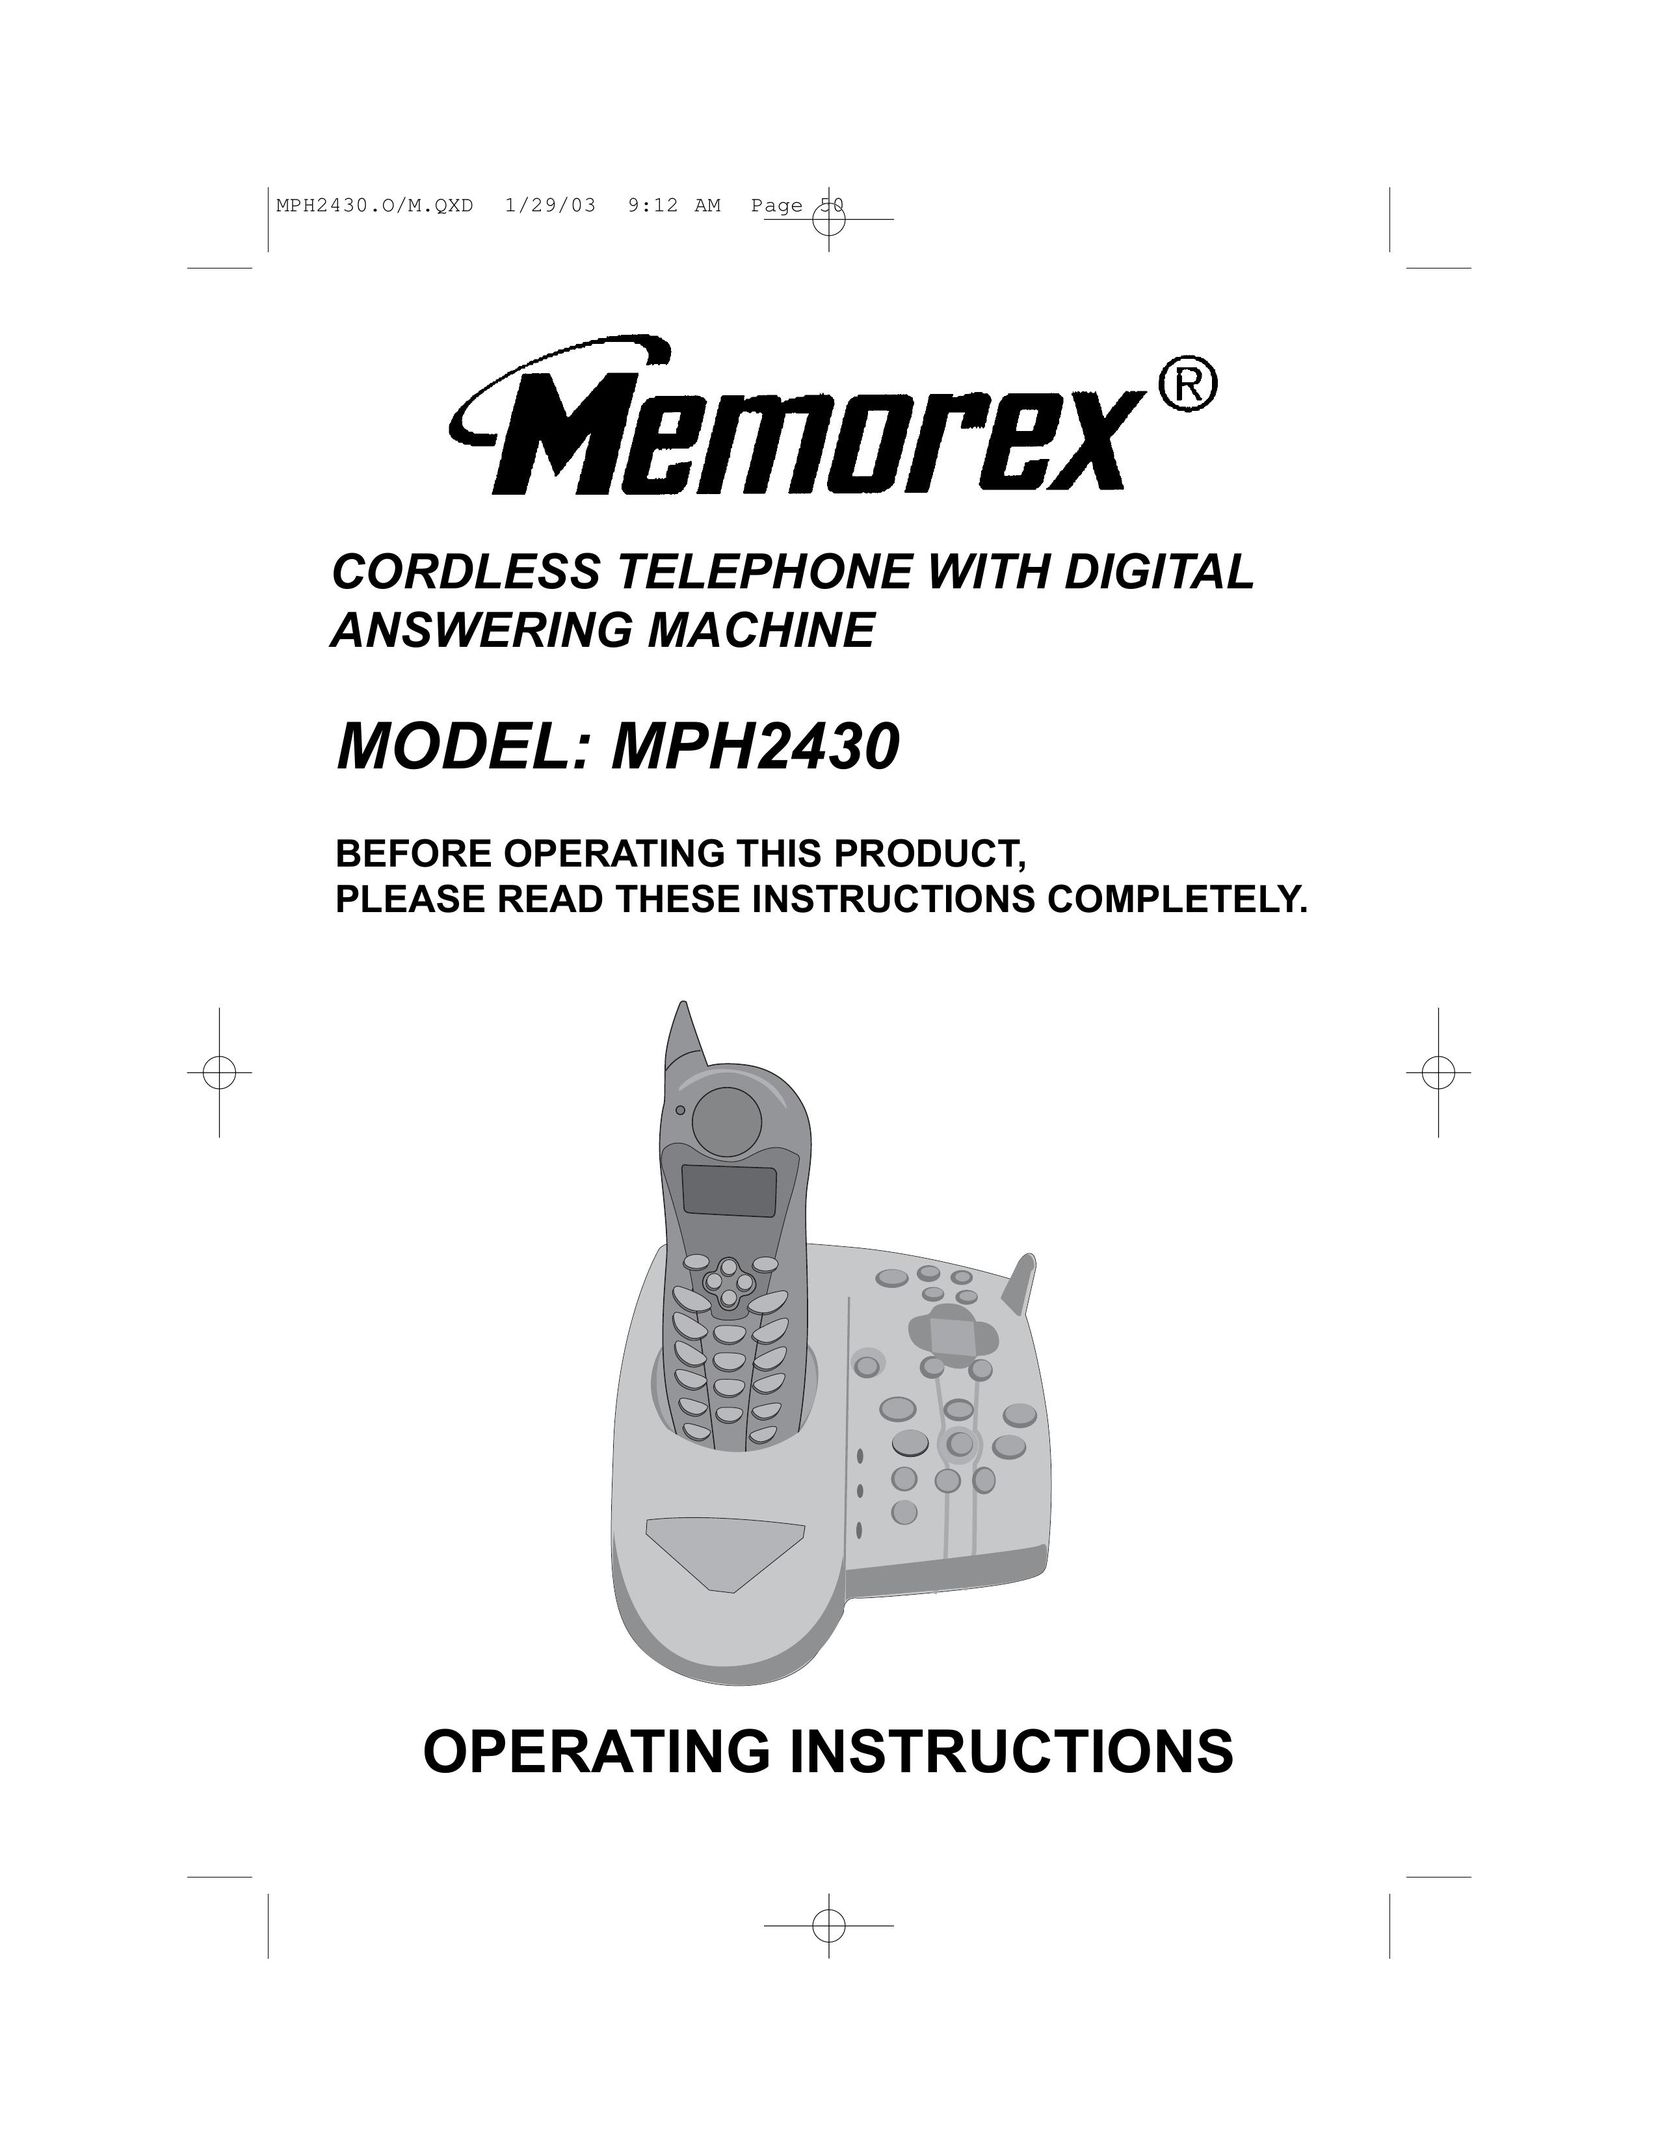 Memorex MPH2430 Cordless Telephone User Manual